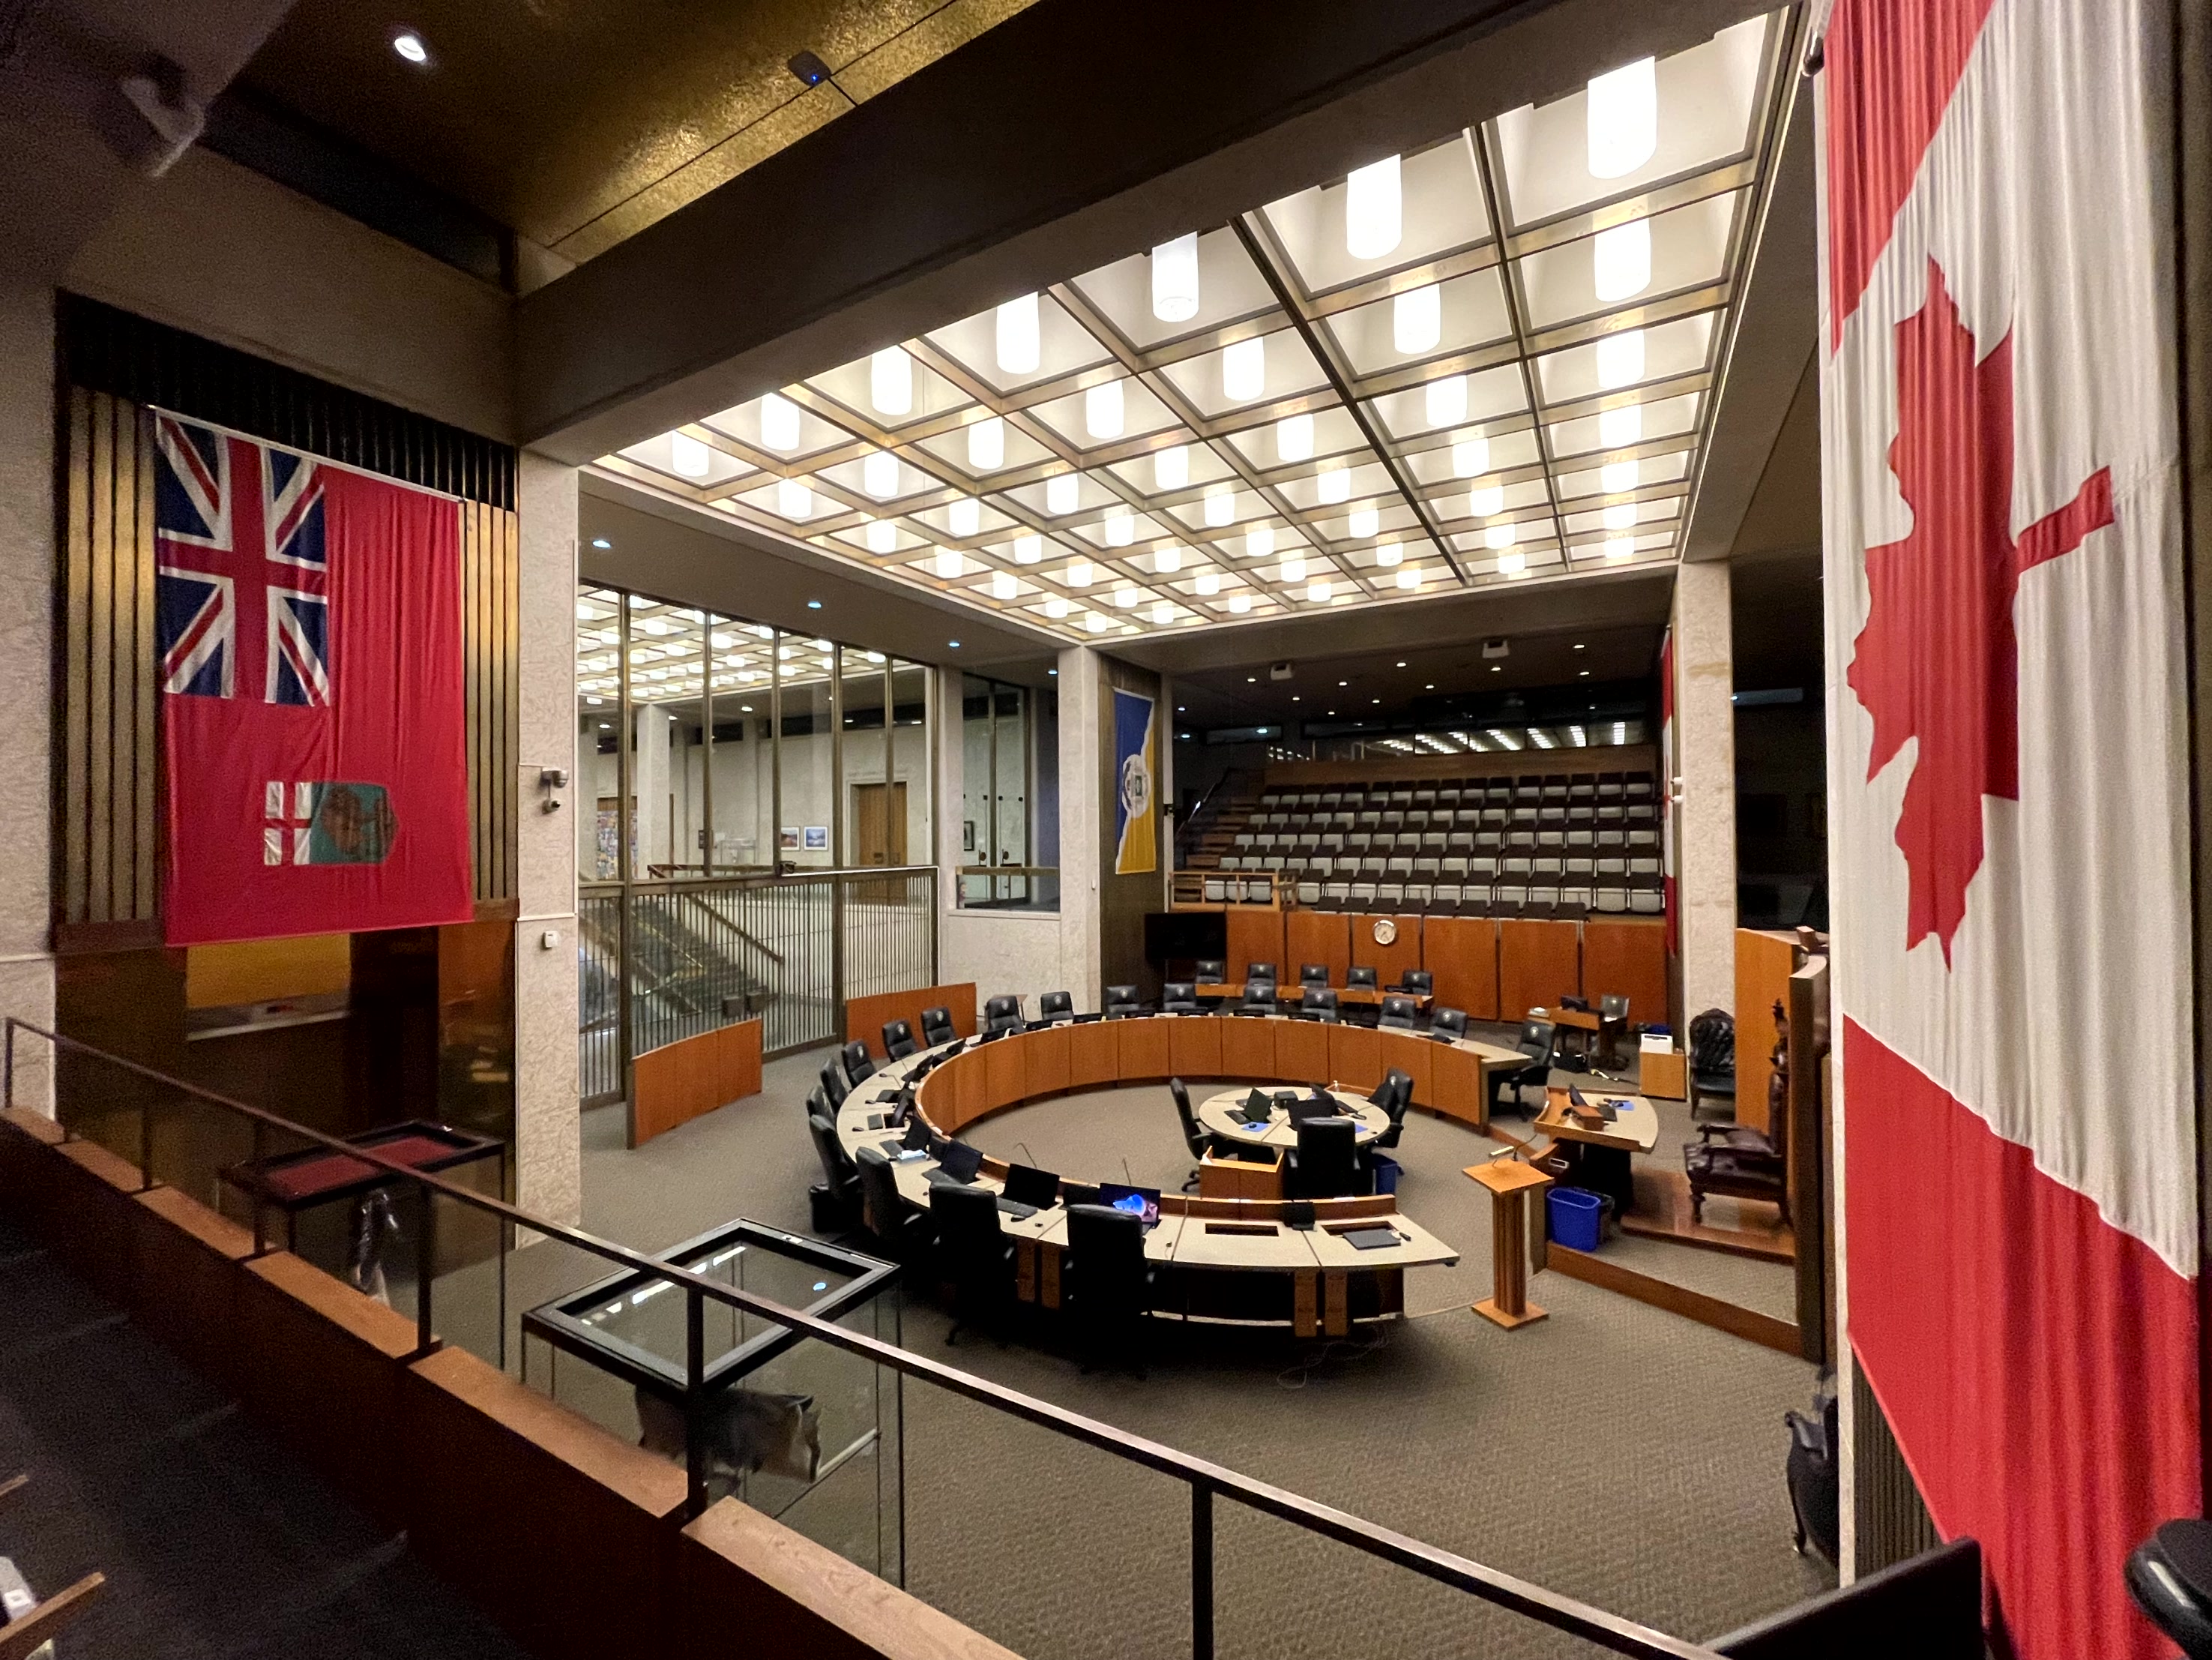 The City of Winnipeg's Council chambers.